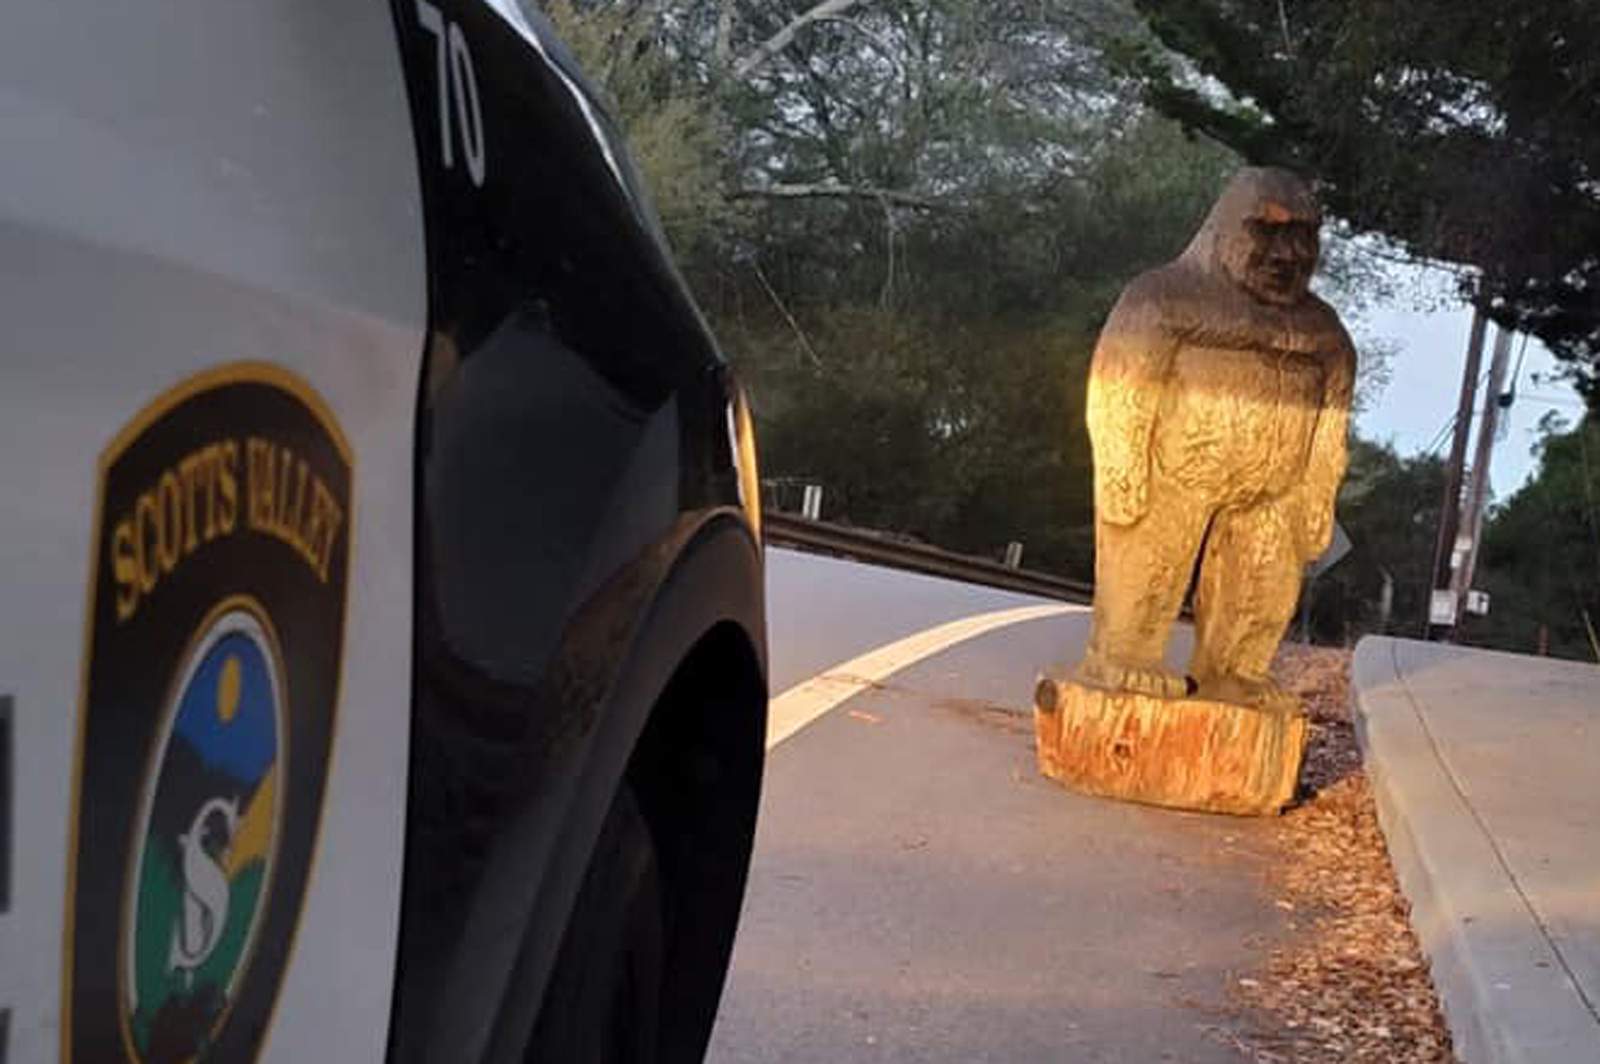 Stolen Bigfoot statue found along road in Santa Cruz County